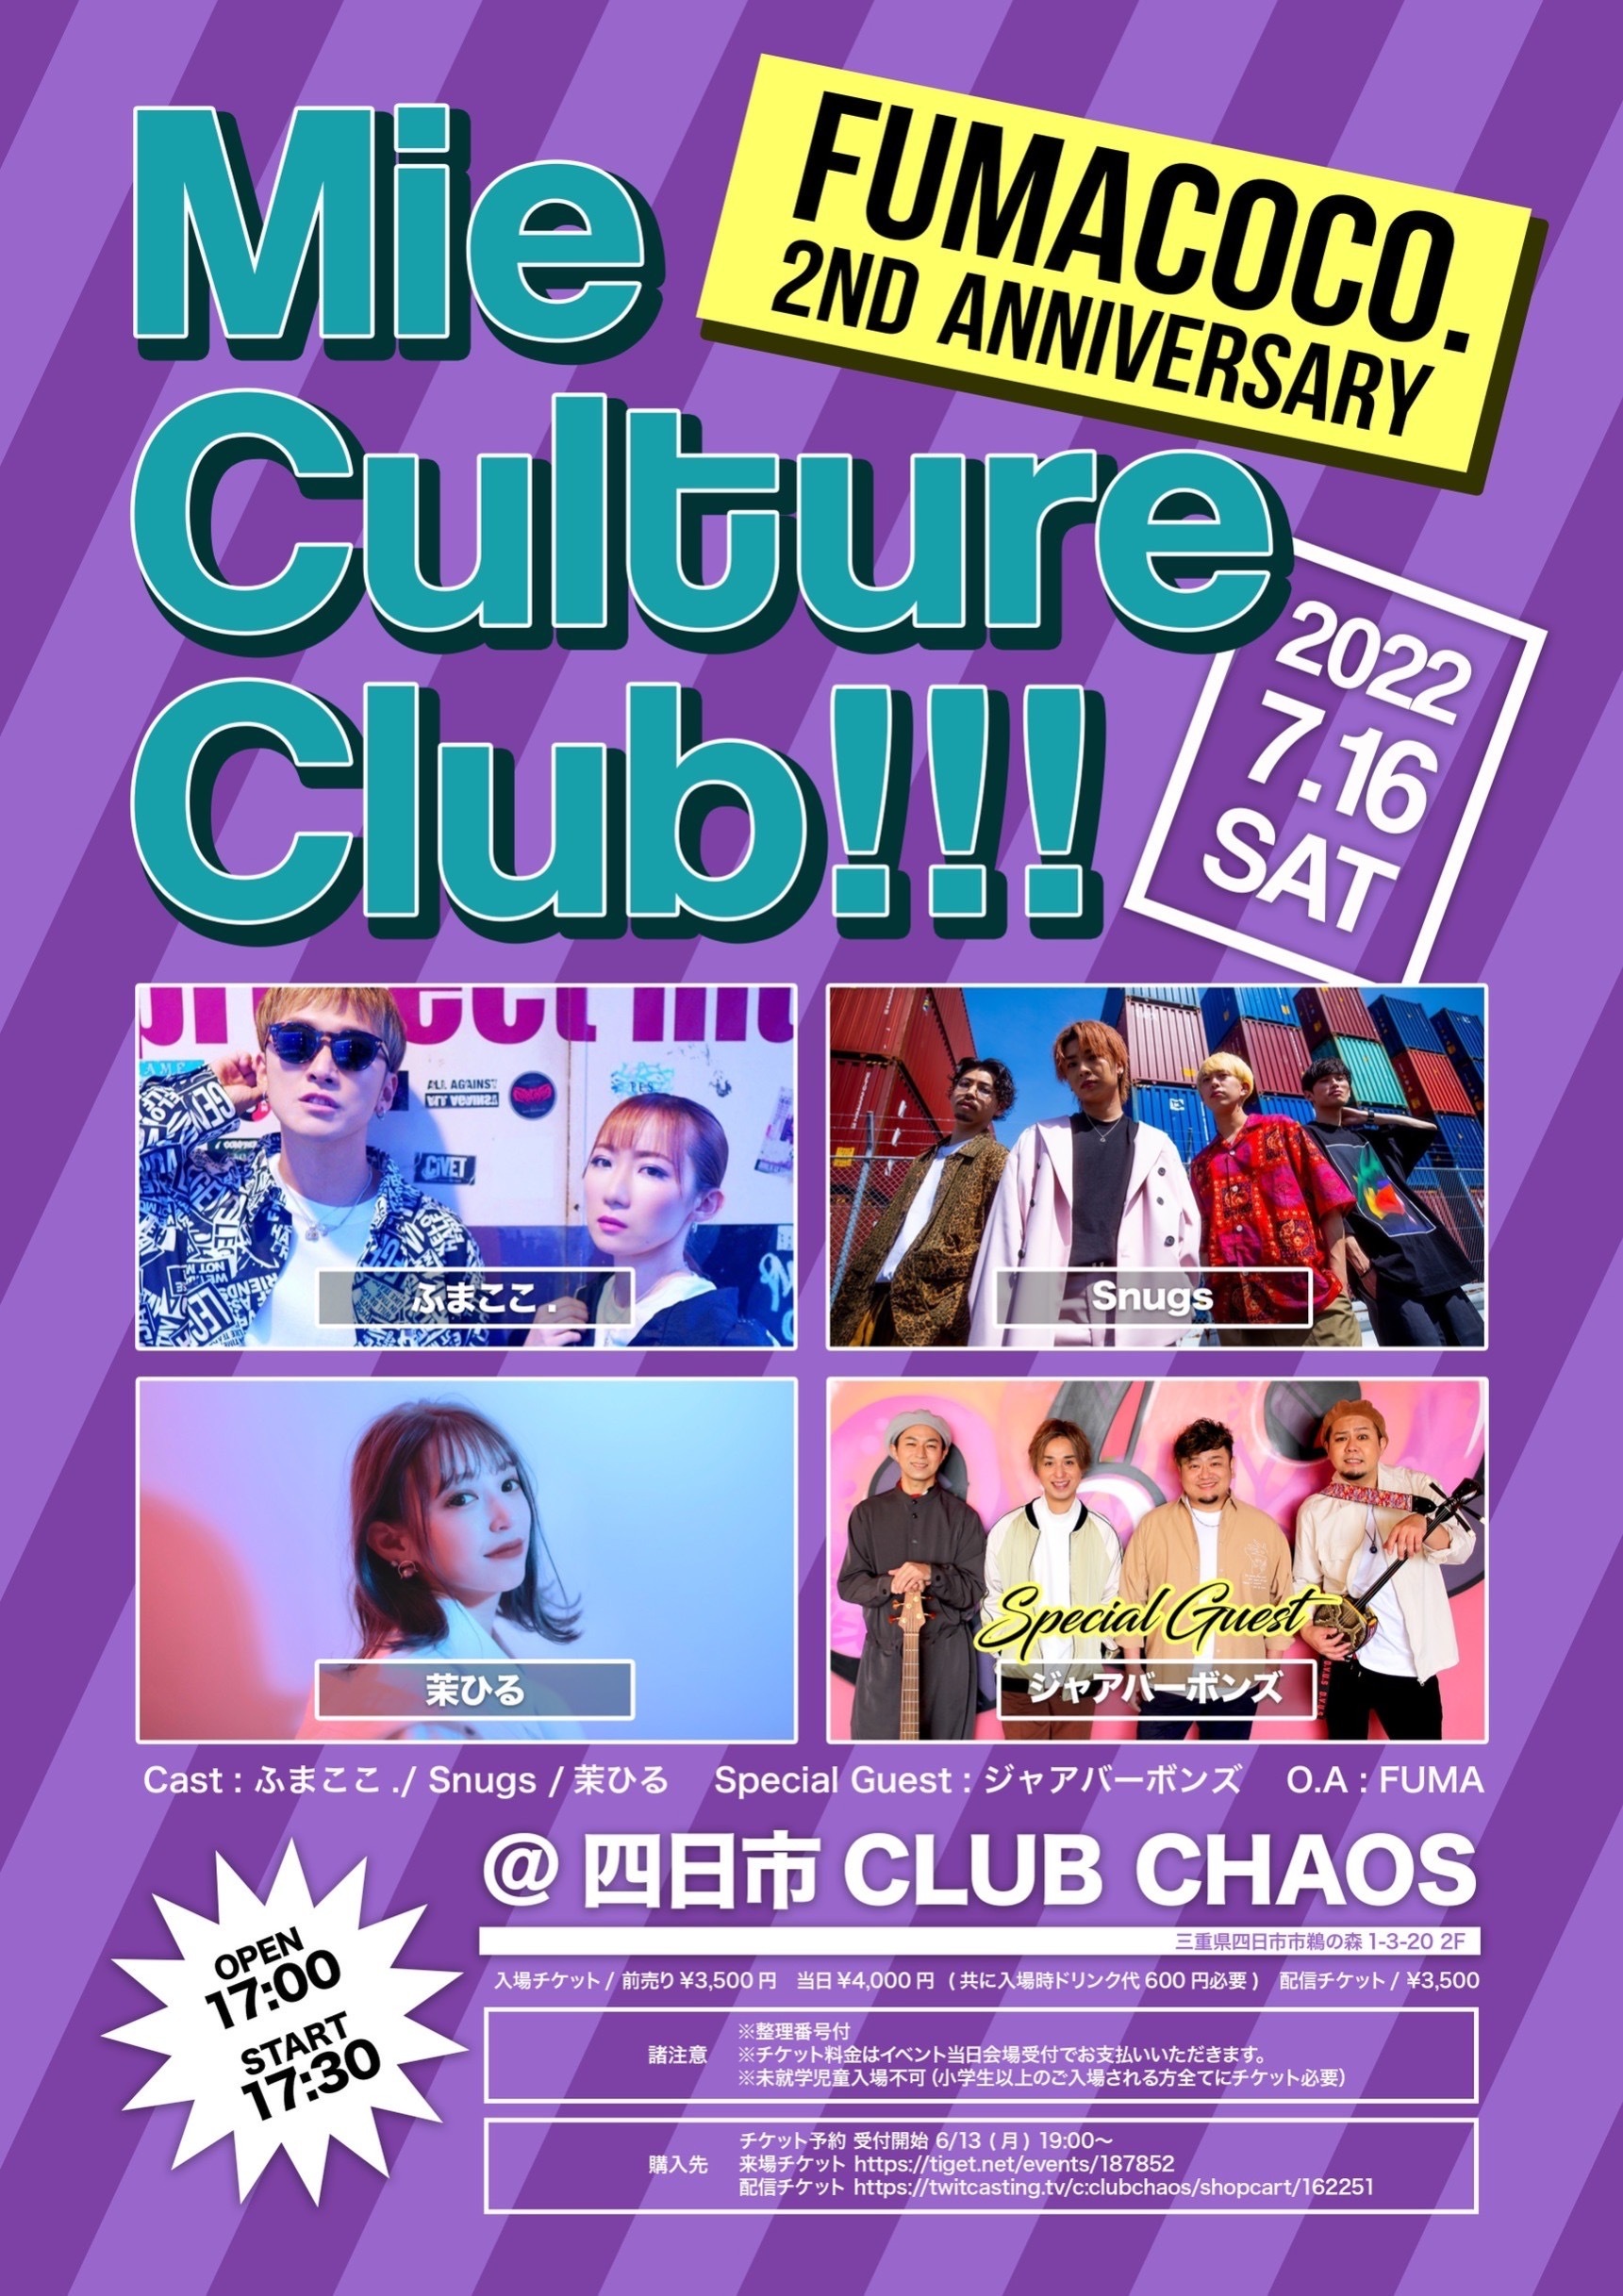 Mie Culture Club!! #ミエカル ～FUMACOCO.2nd ANNIVERSARY～!